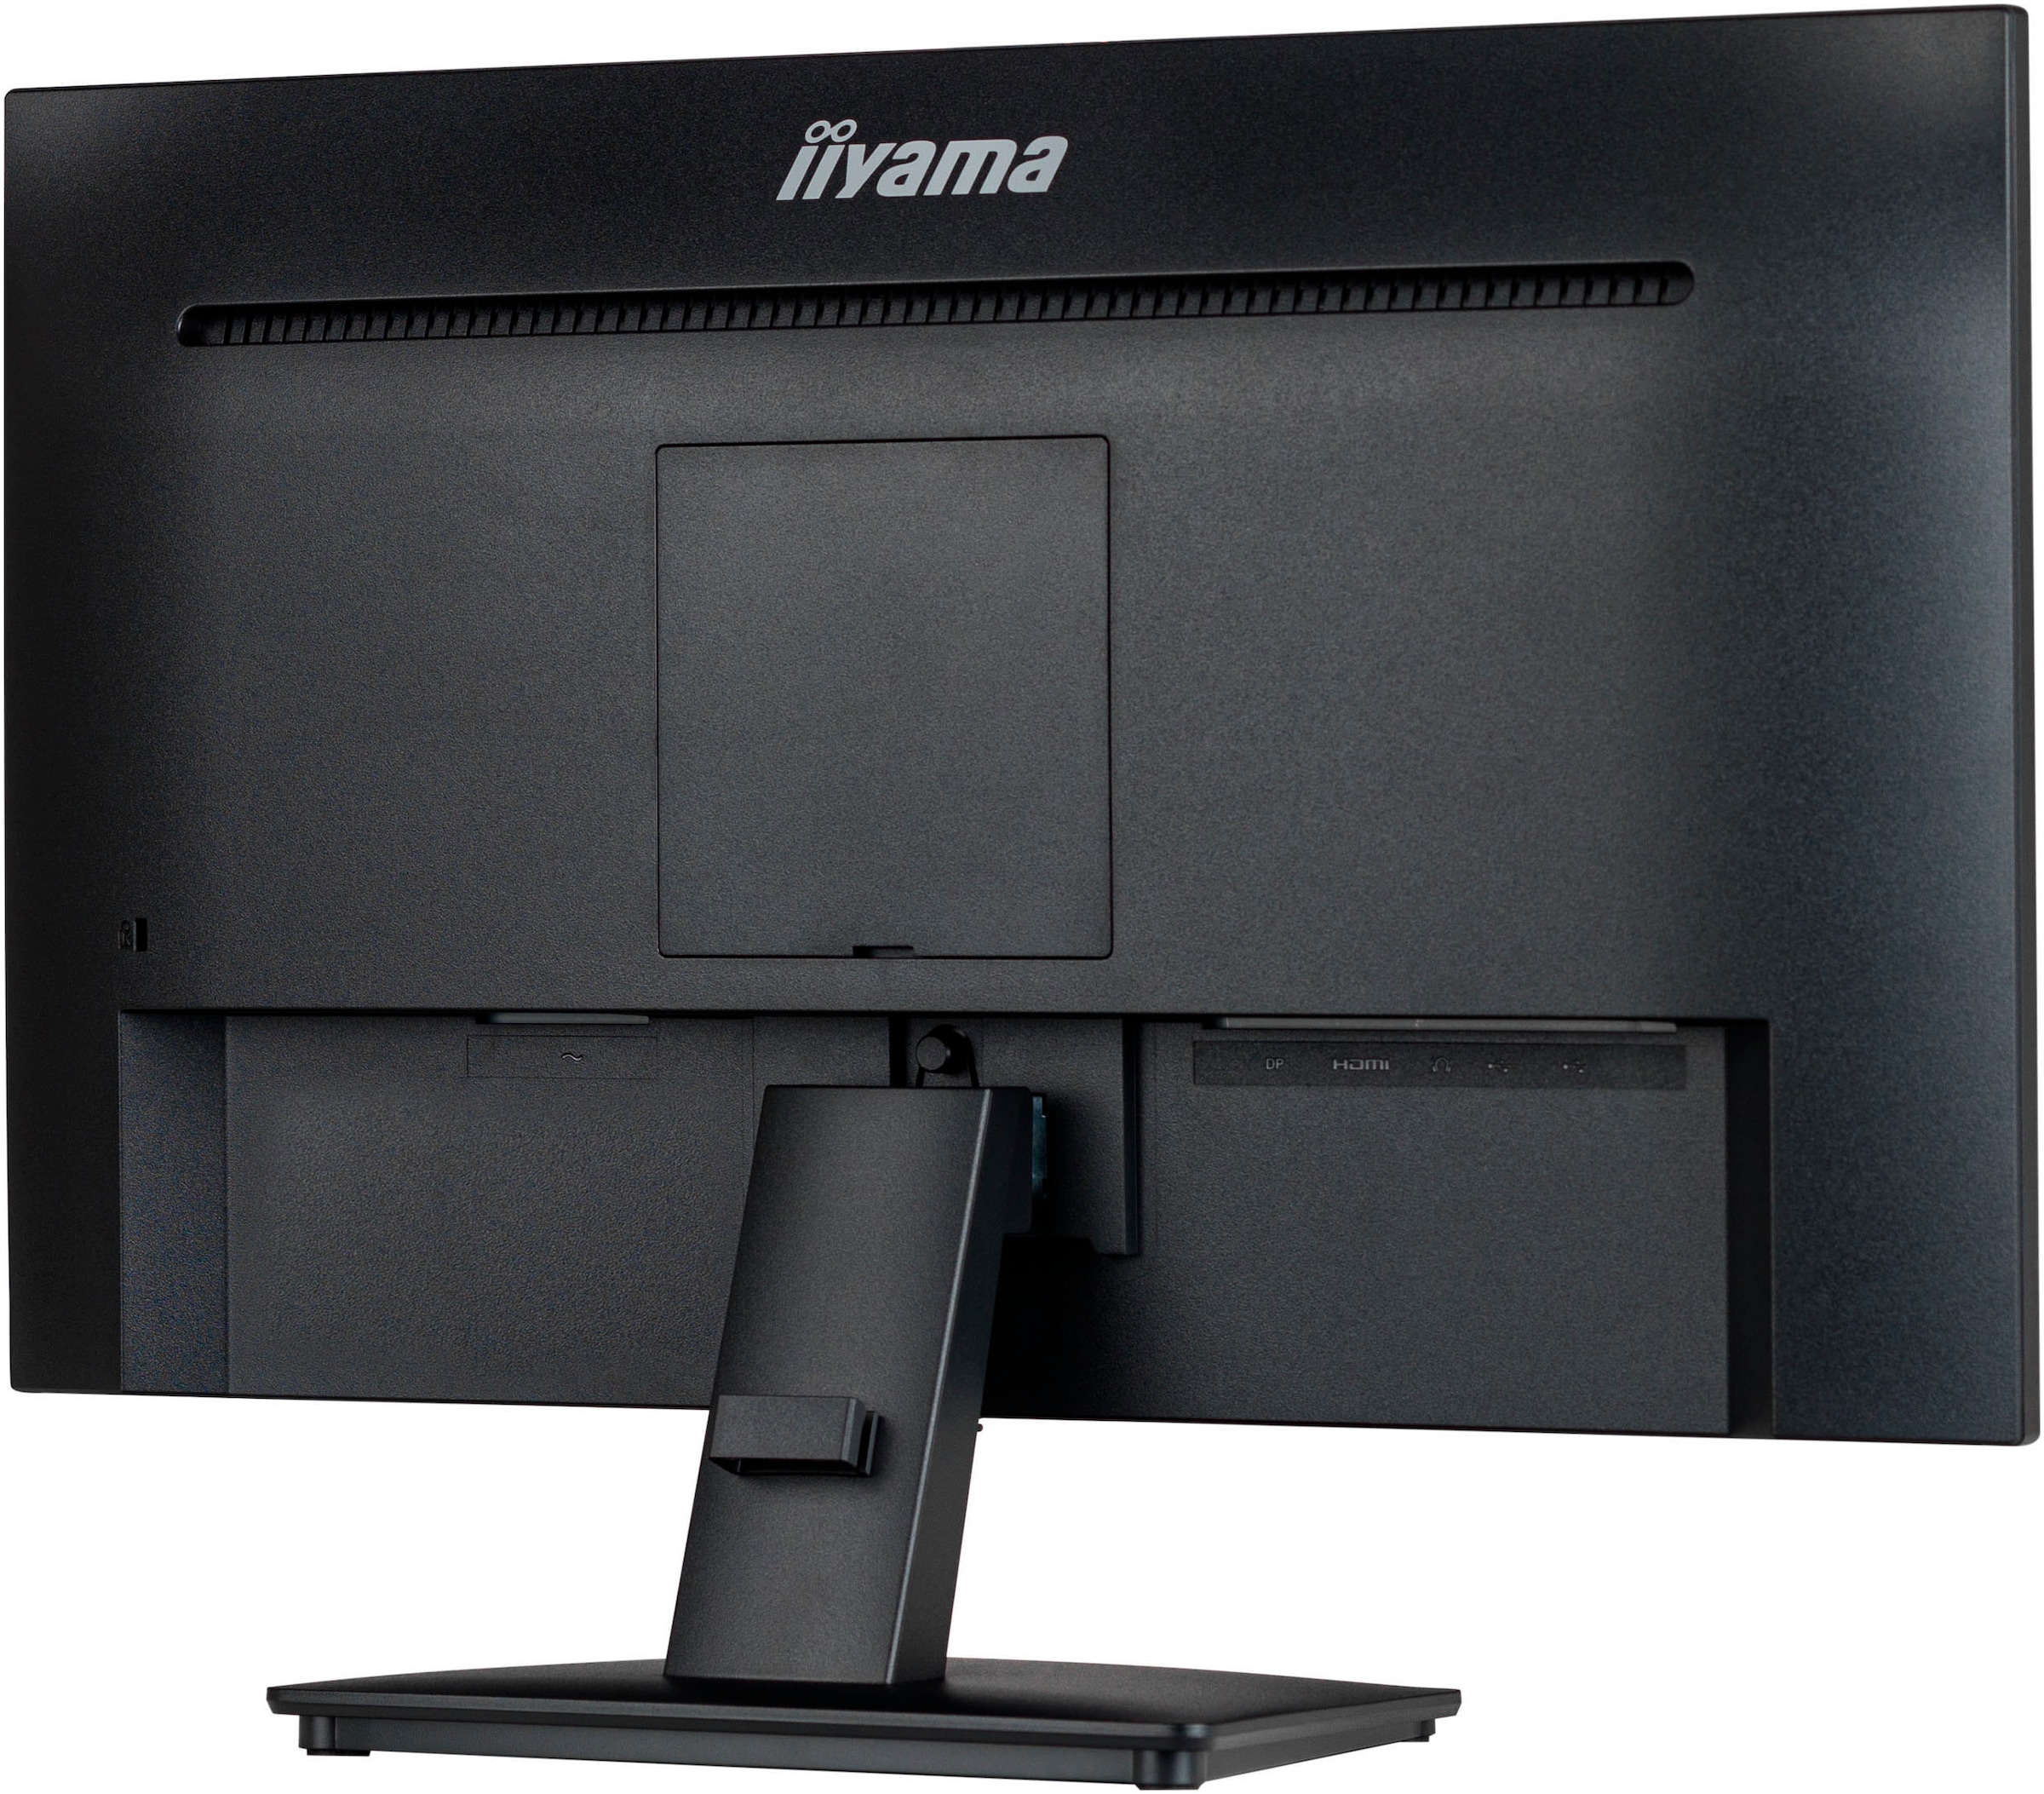 Iiyama LED-Monitor »XU2494HS-B2«, 61 cm/24 Zoll, 1920 x 1080 px, Full HD, 4 ms Reaktionszeit, 75 Hz